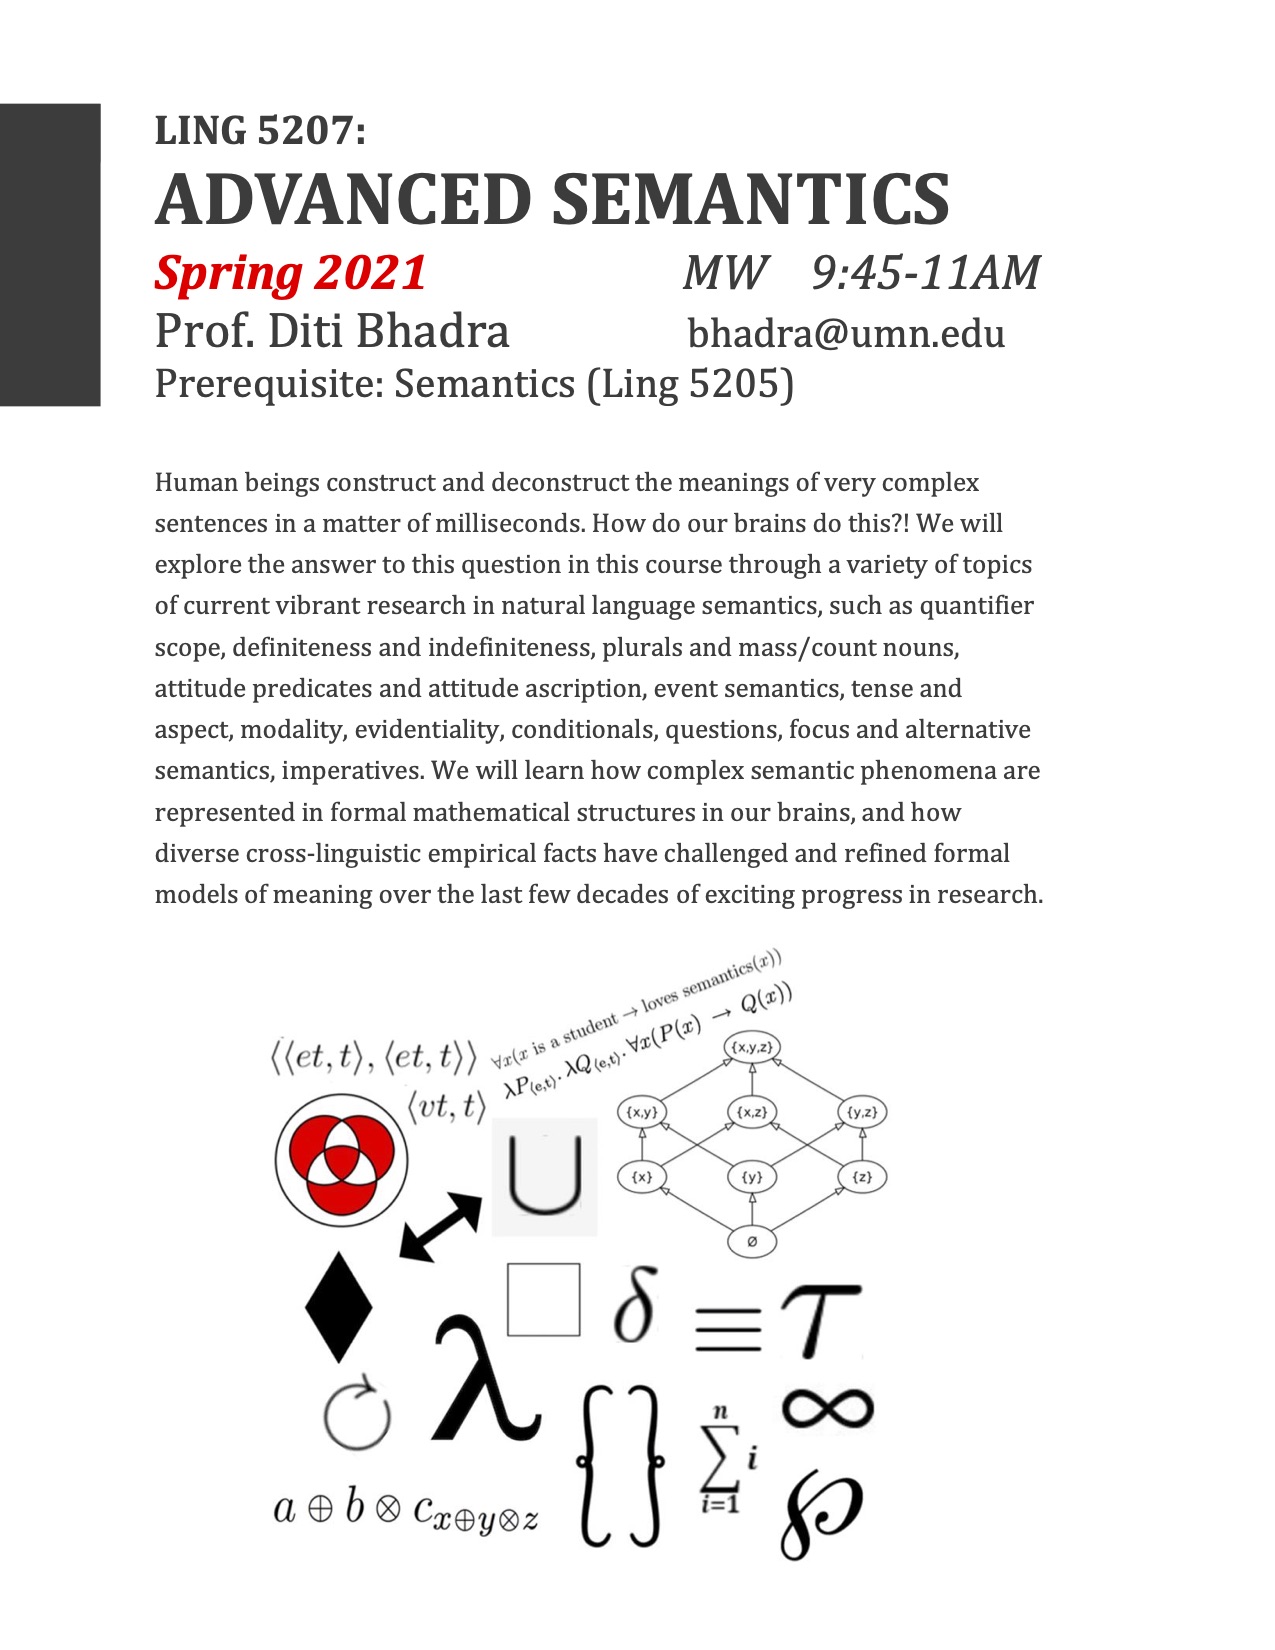 Flyer for LING 5207: Advanced Semantics